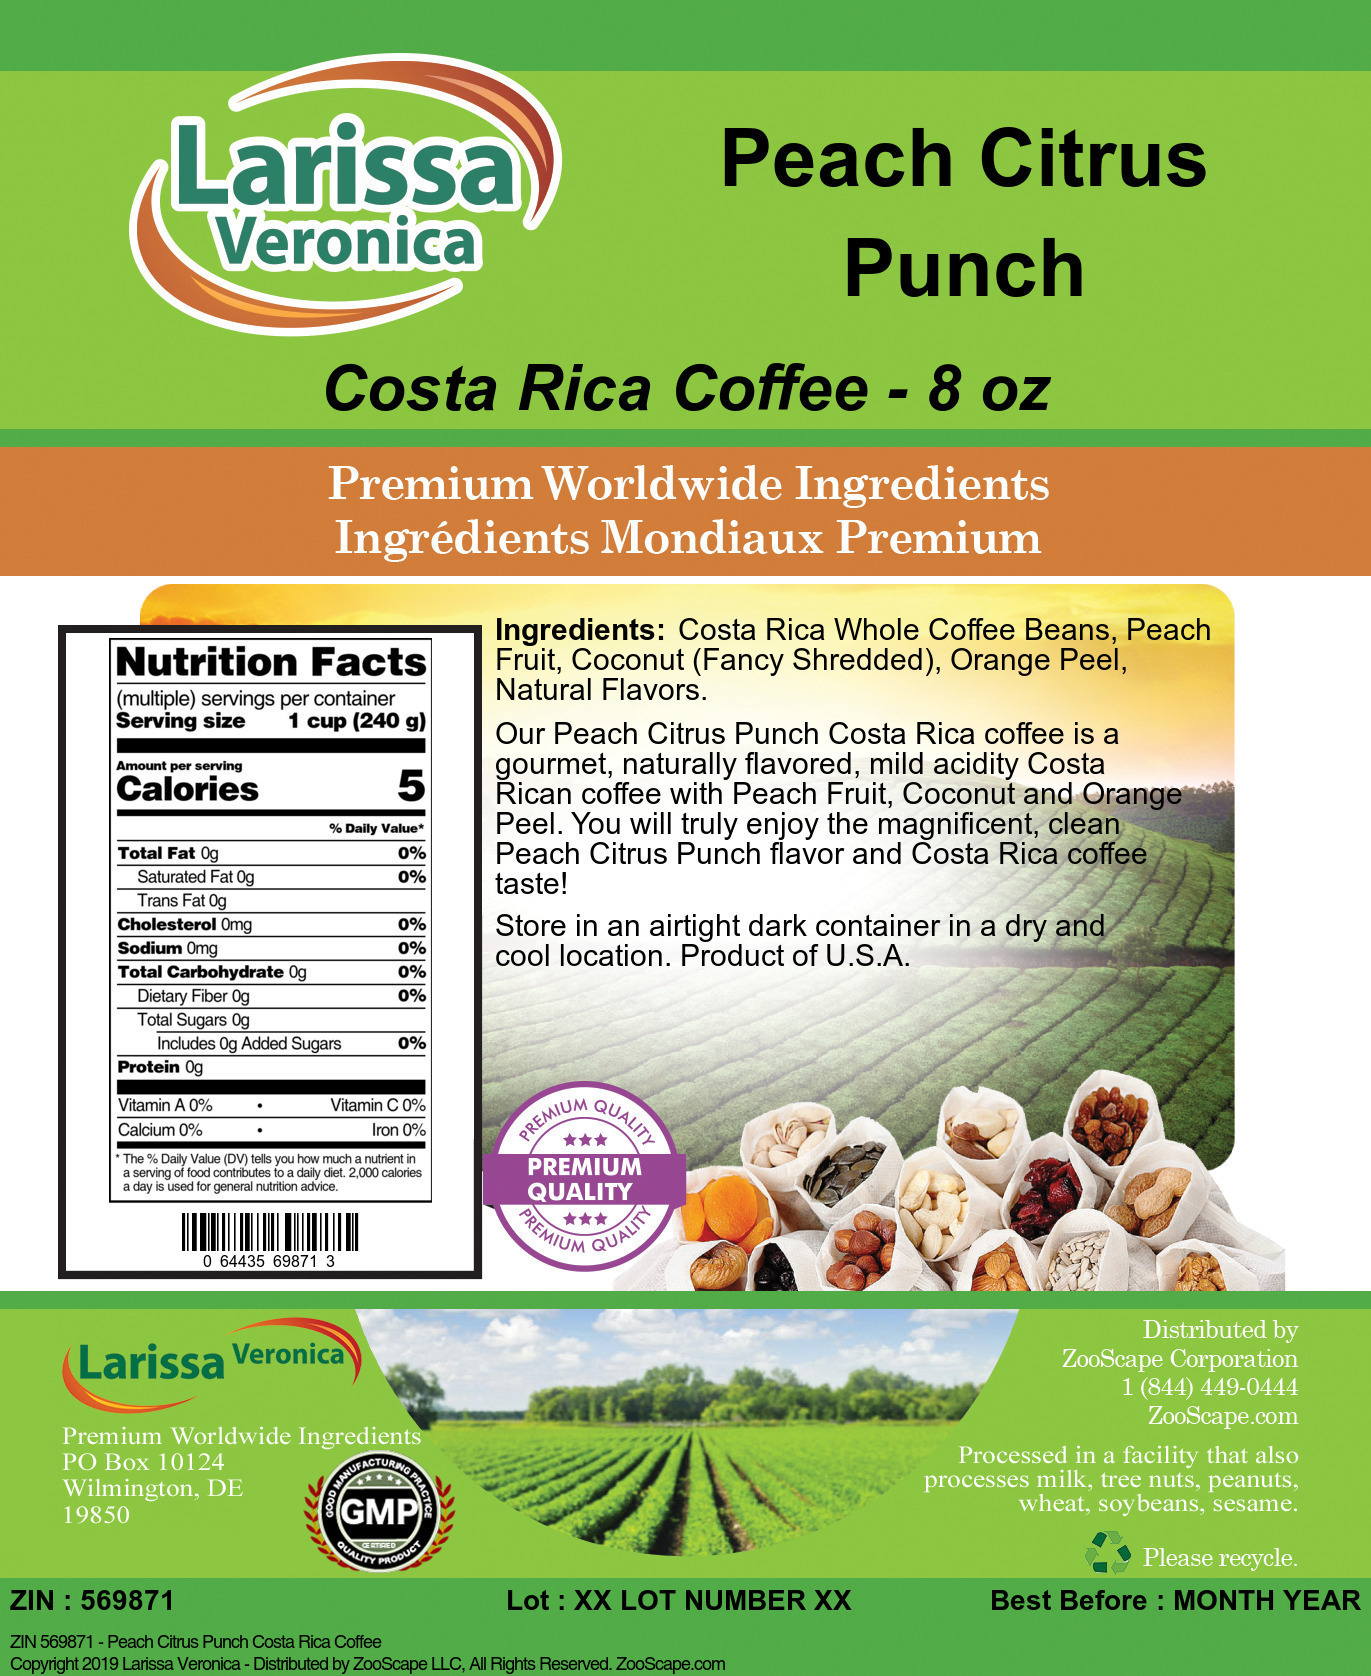 Peach Citrus Punch Costa Rica Coffee - Label